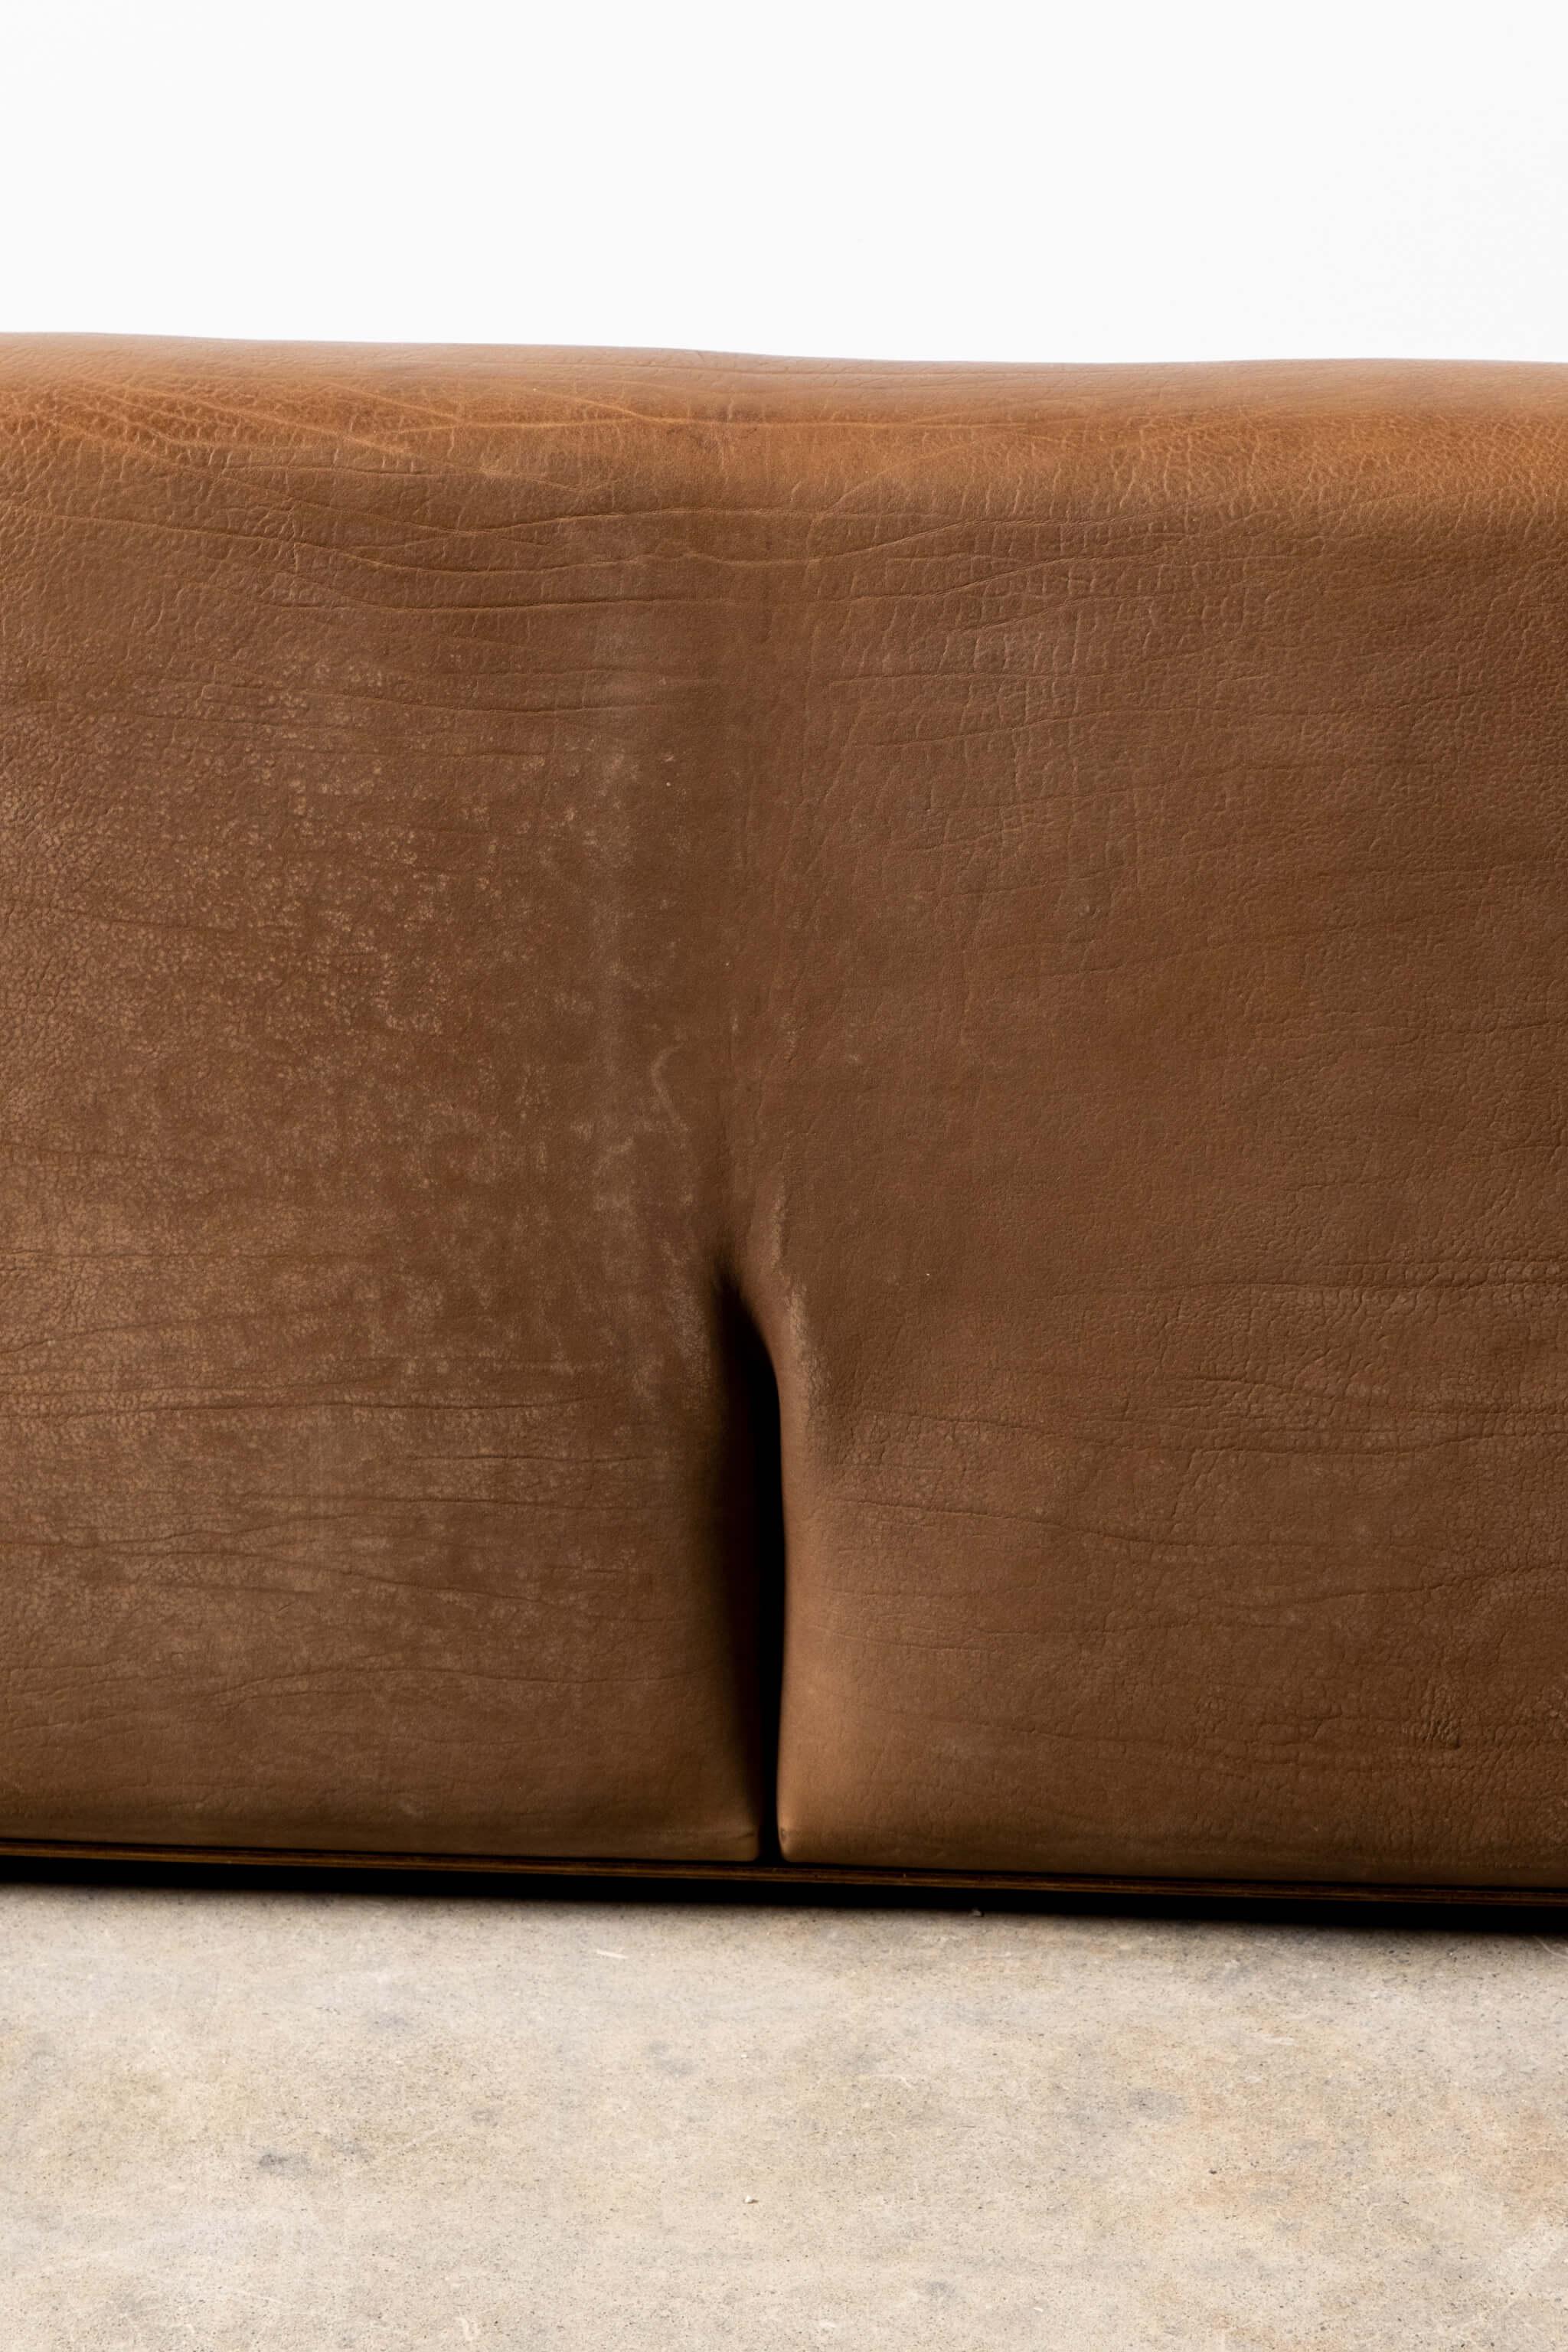 De Sede DS-47 Neck Leather 2-Seater Sofa For Sale 2